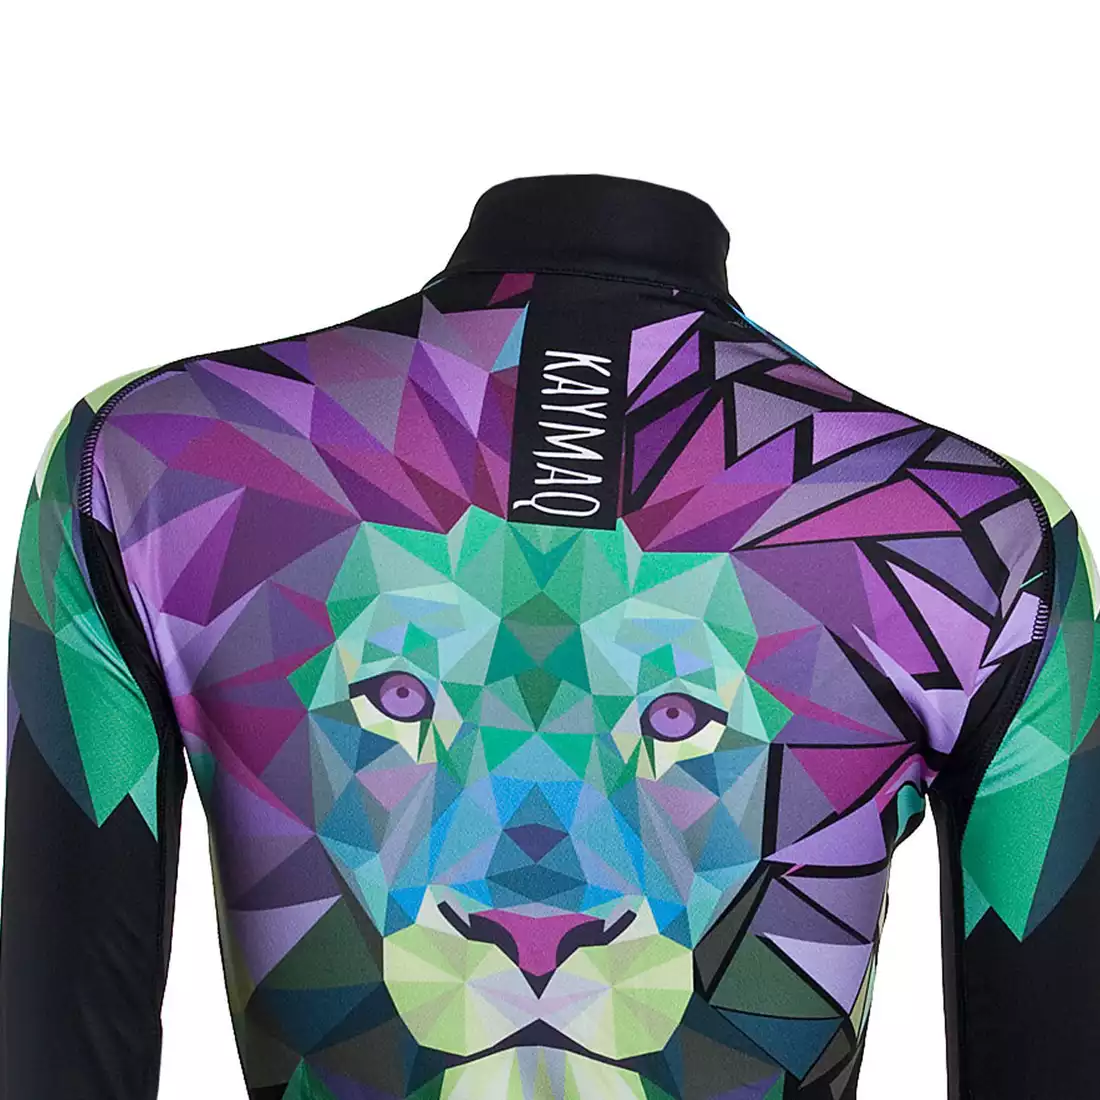 KAYMAQ POLYGONAL LION dámsky cyklistický dres